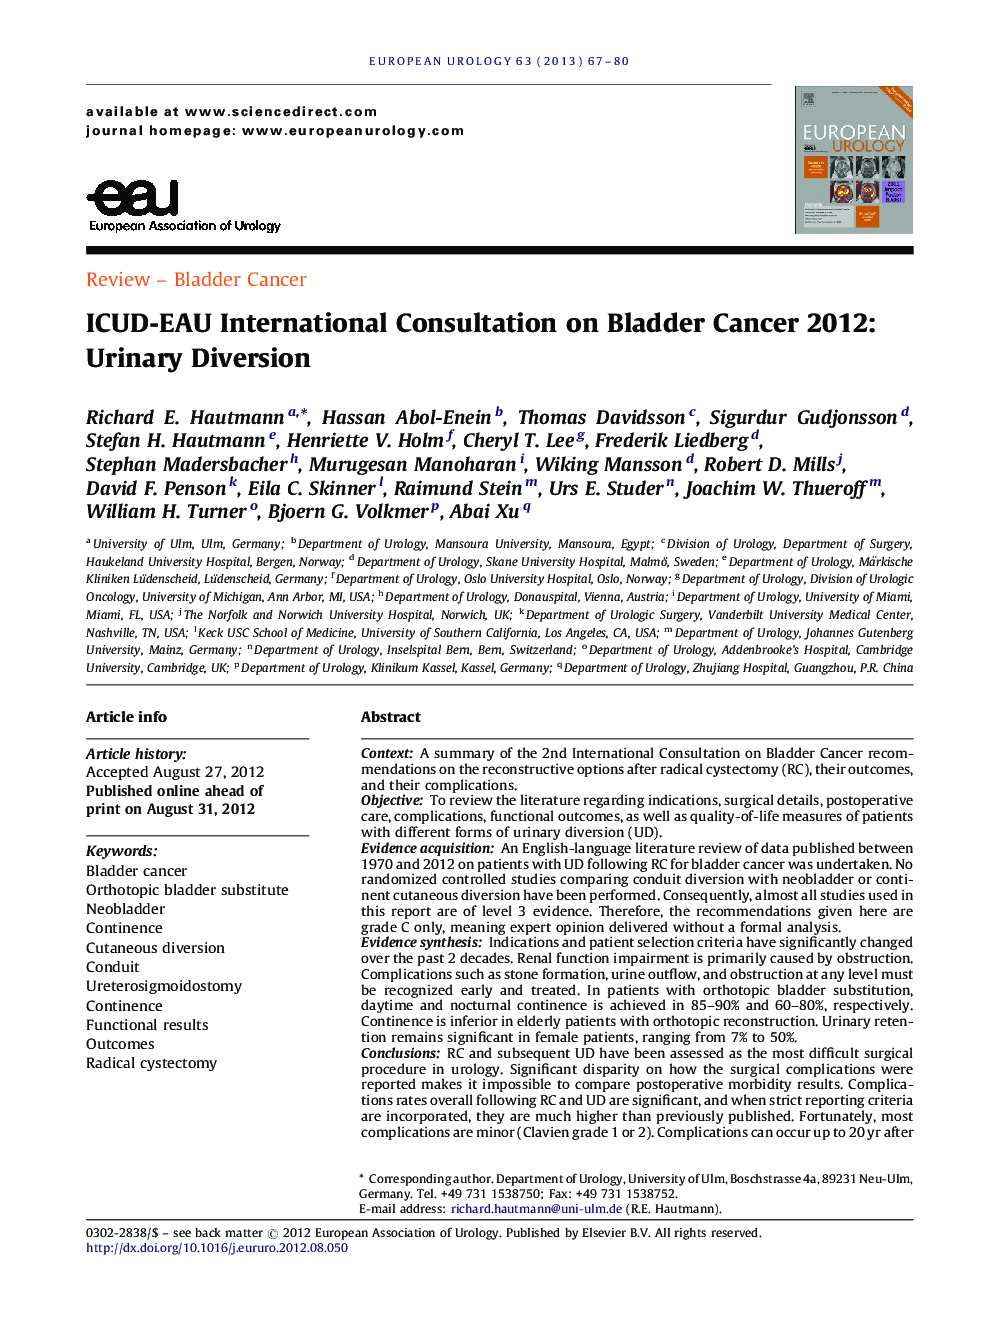 ICUD-EAU International Consultation on Bladder Cancer 2012: Urinary Diversion